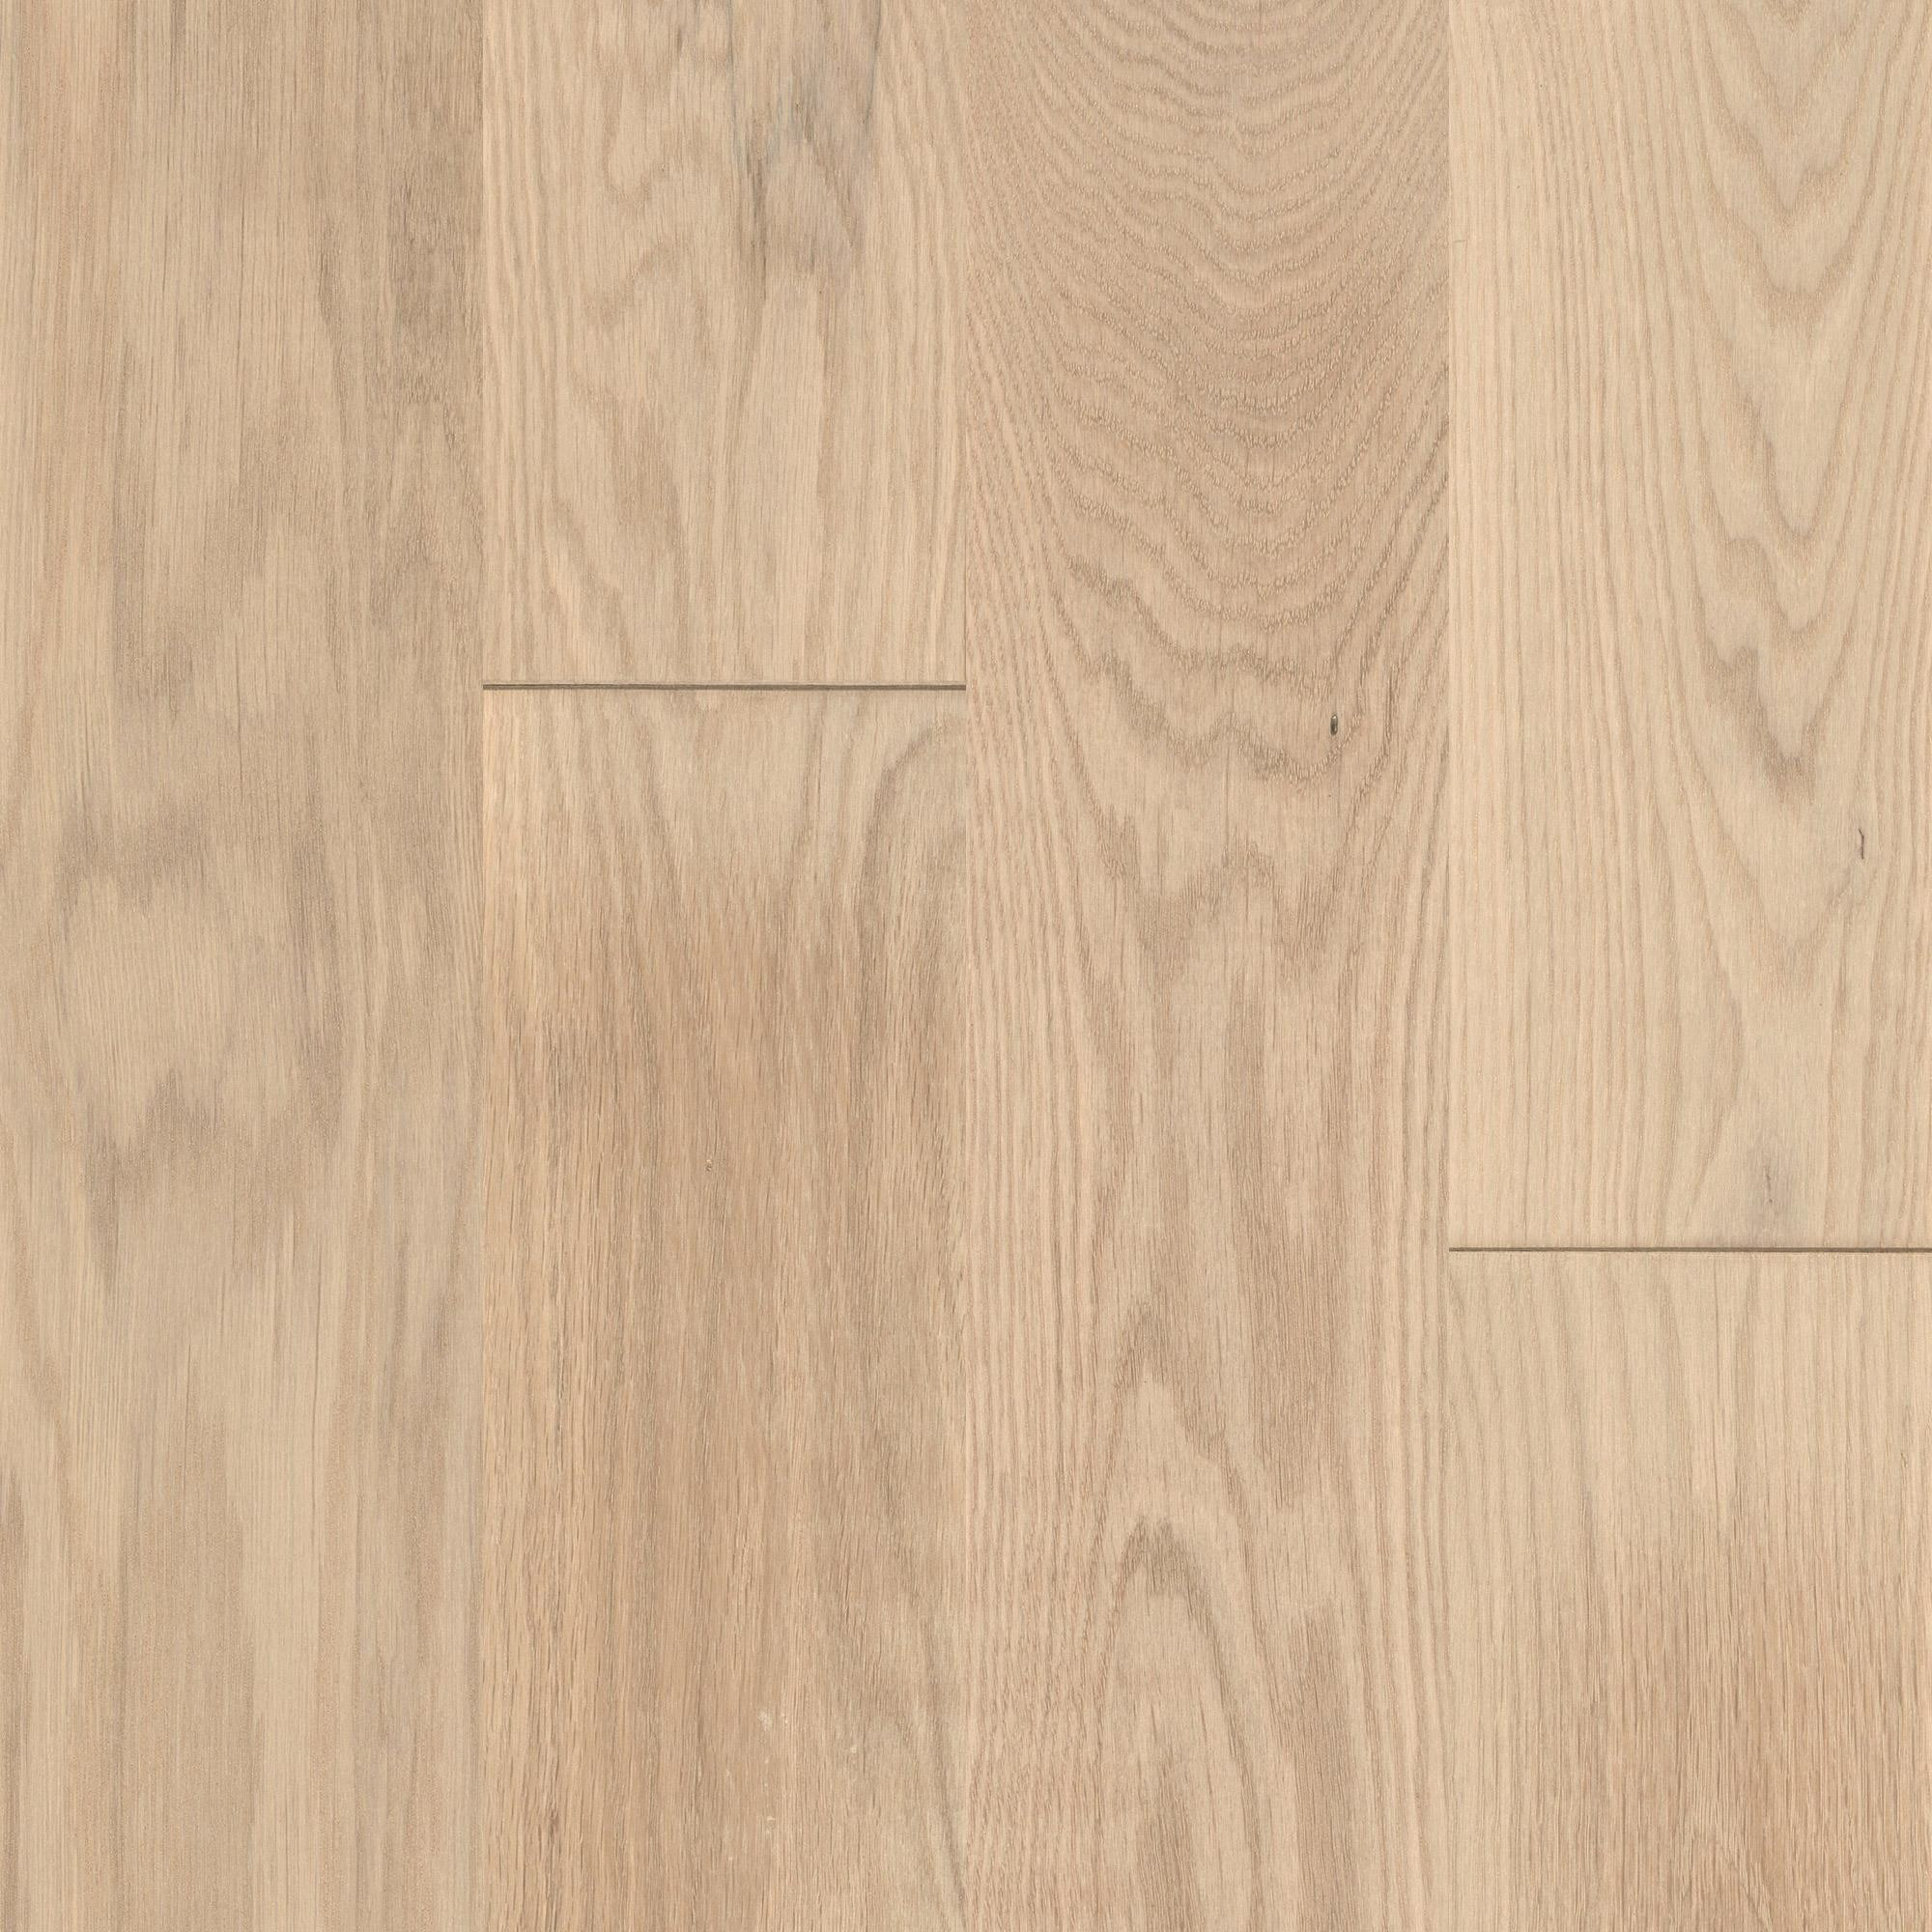 benefits of hardwood flooring vs laminate of mullican castillian oak glacier 5 wide solid hardwood flooring in oak glacier castillian 5 x 55 approved